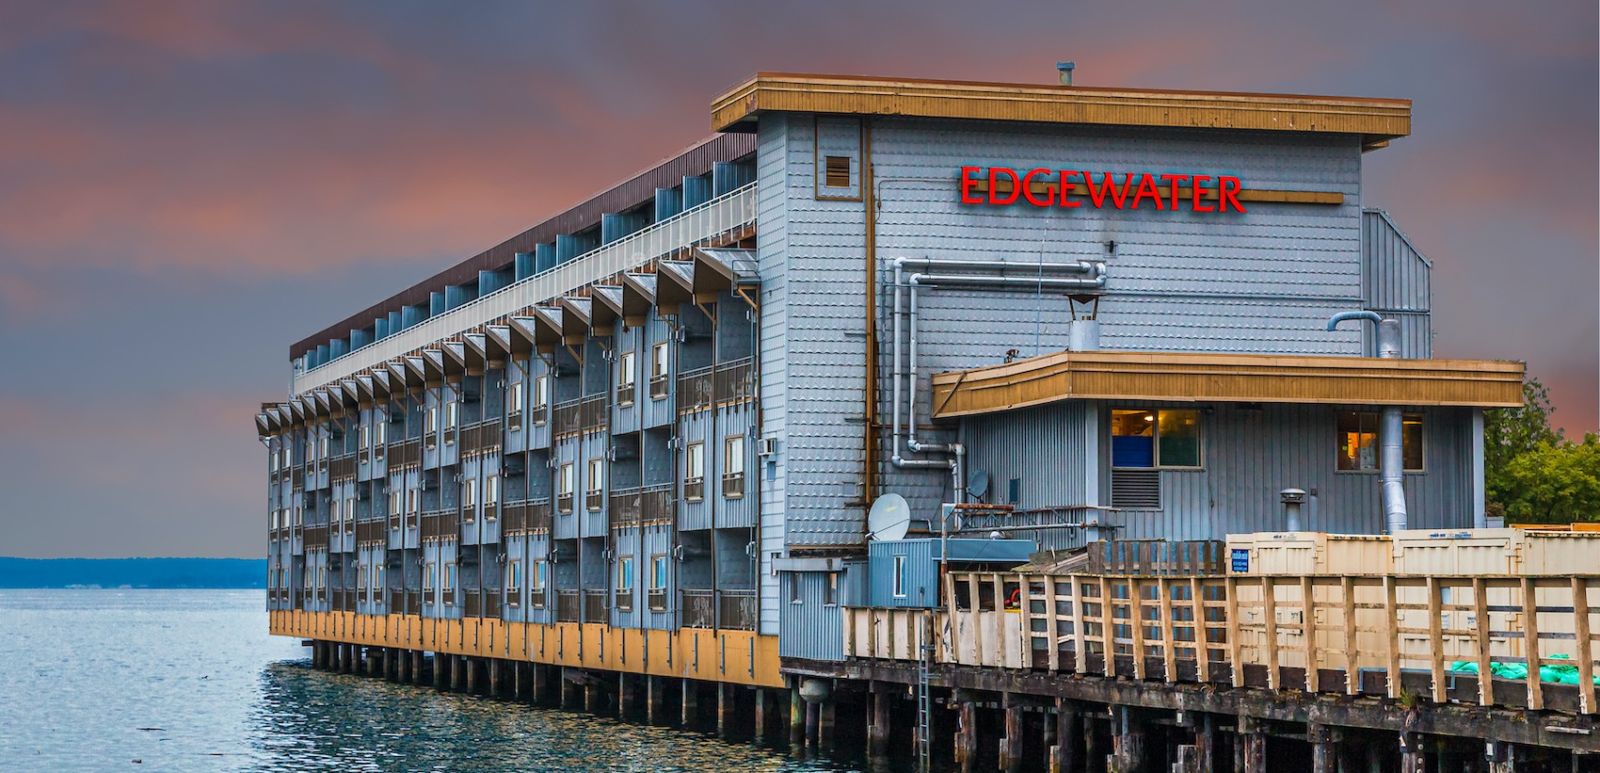 The Edgewater in Seattle. Photo via Shutterstock.